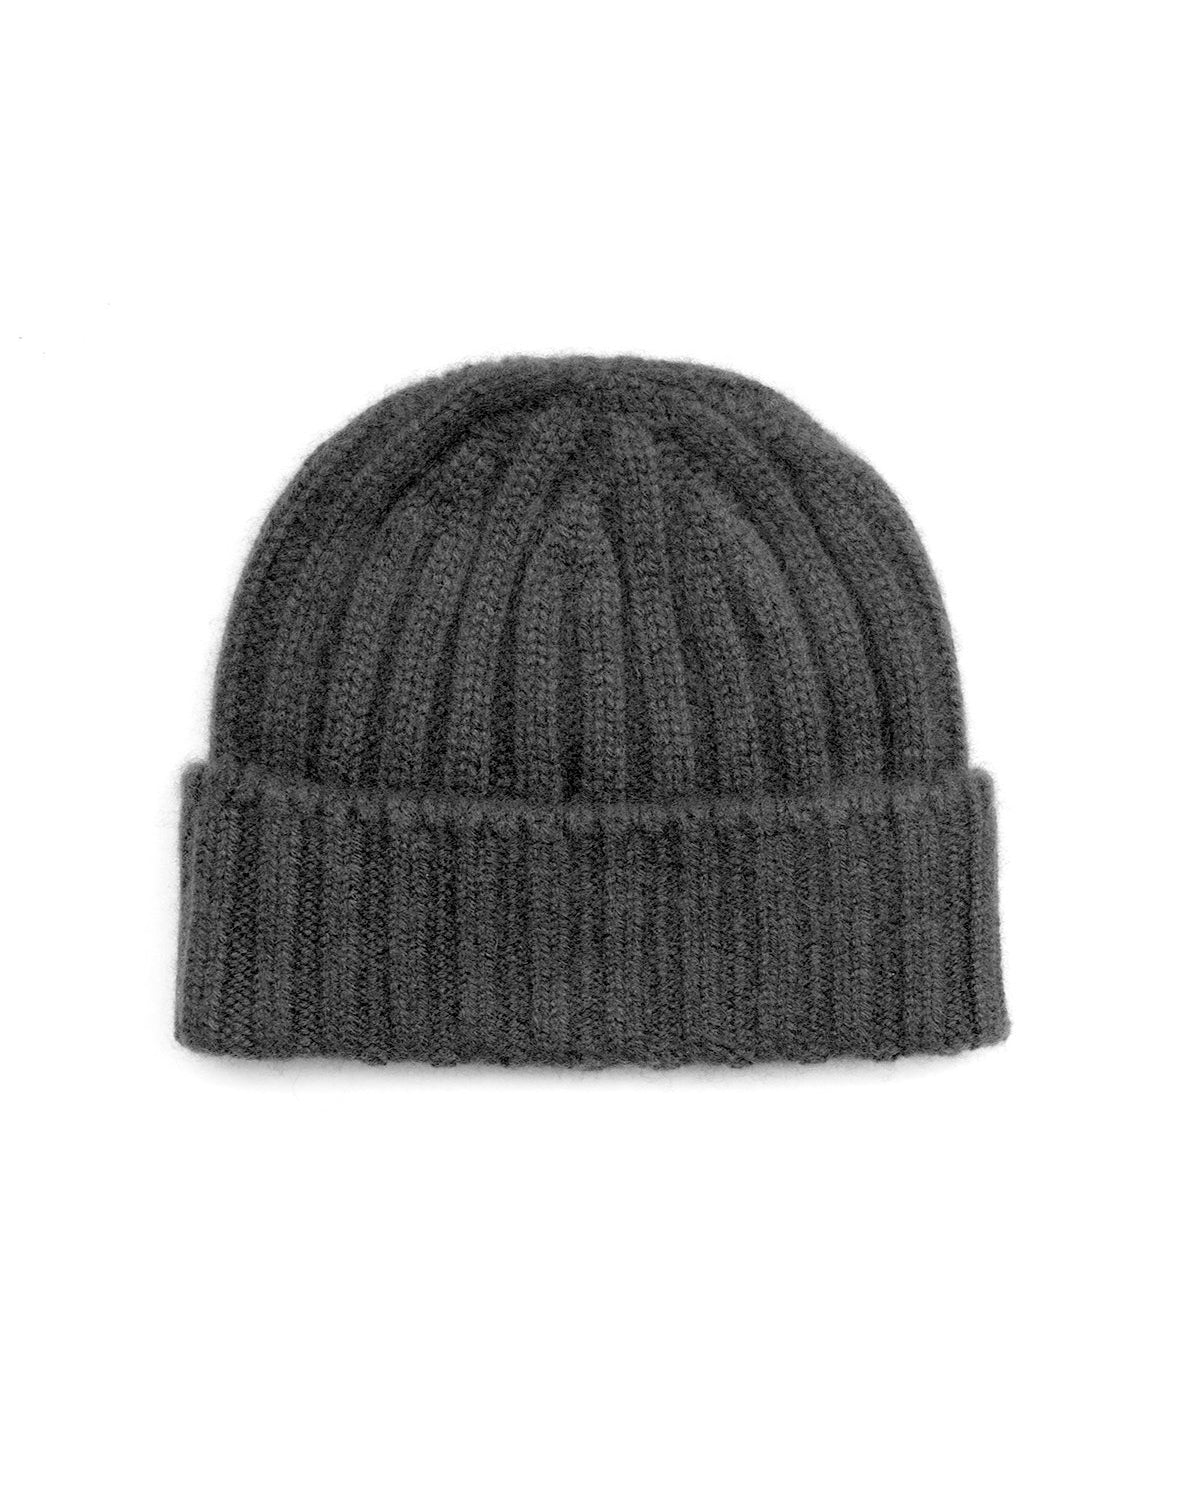 Knit Cap in Cashmere 2x2 Rib - Gray